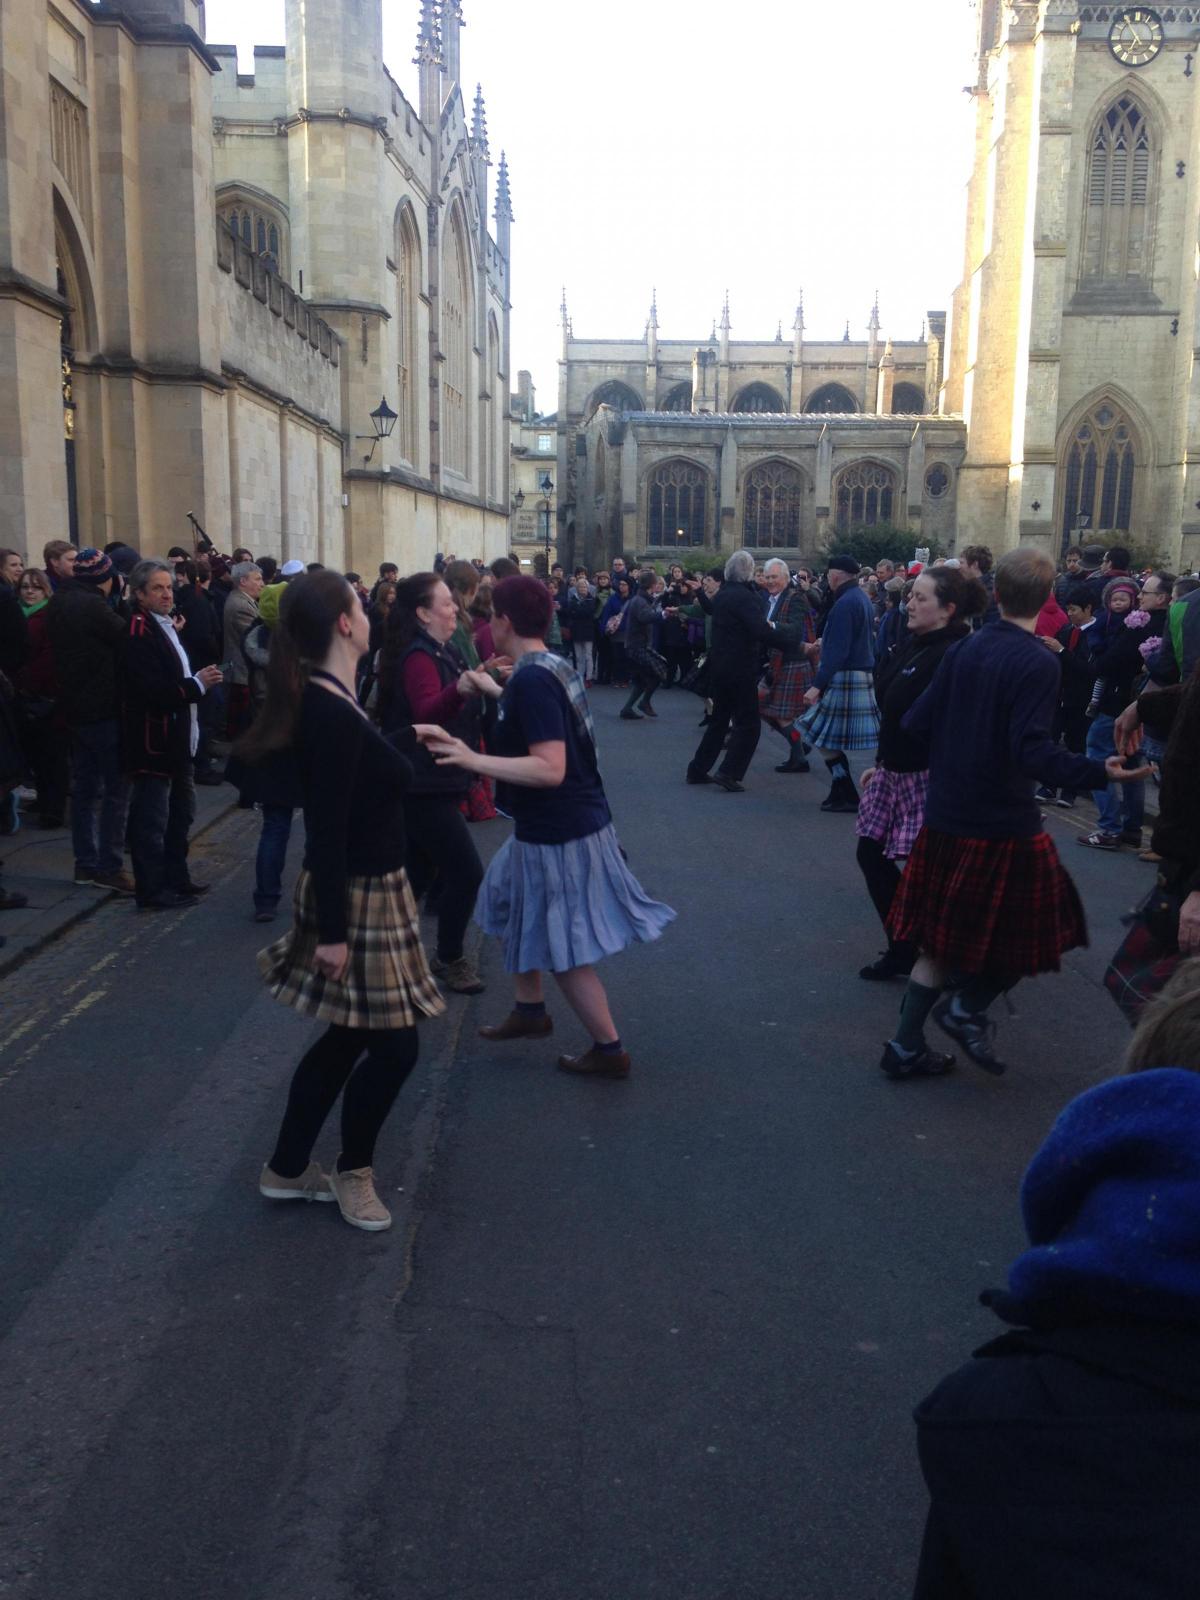 Scottish dancing at the Radcliffe Camera